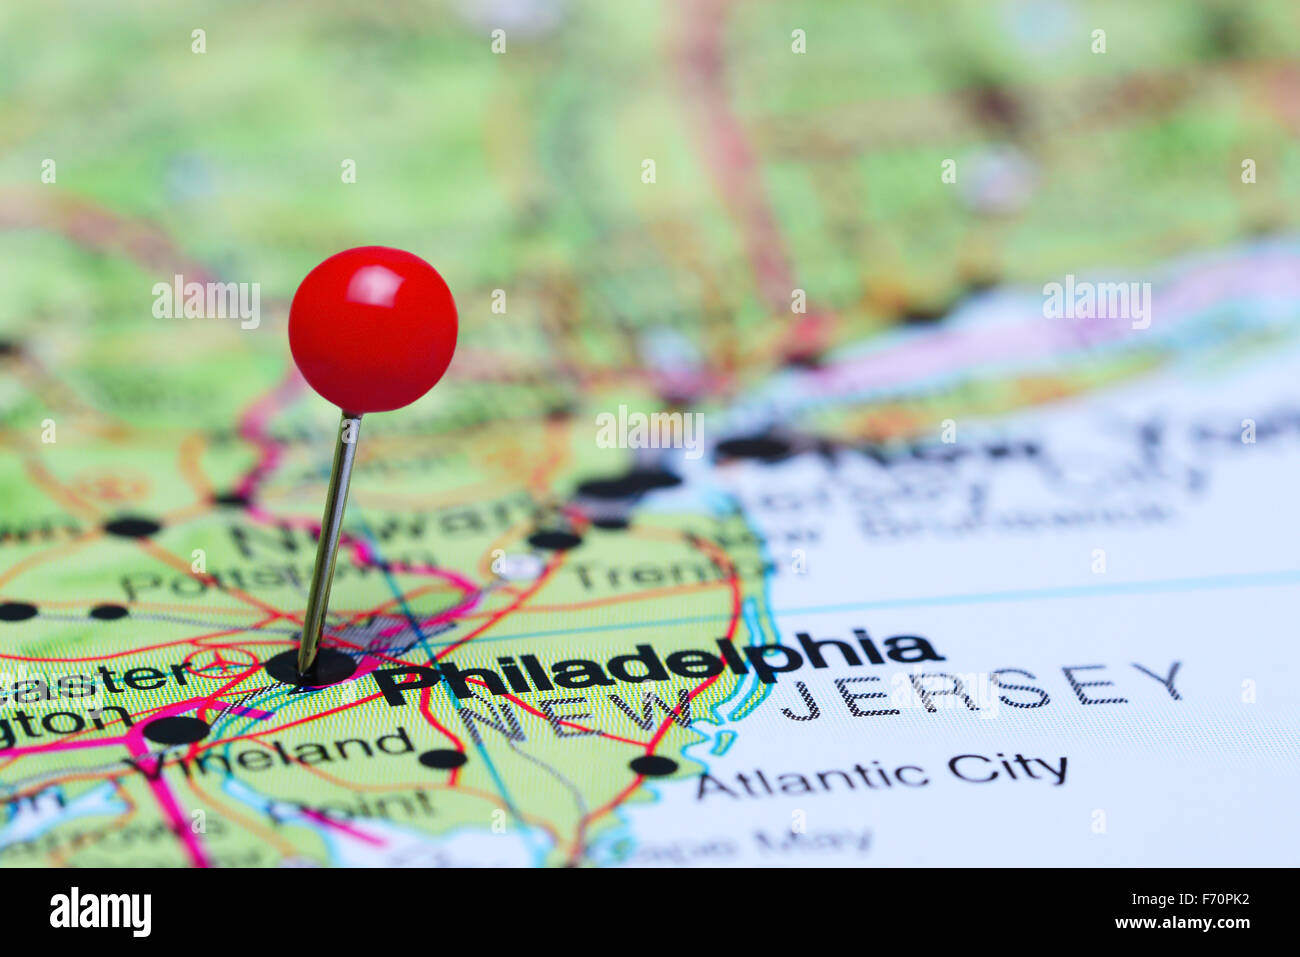 Philadelphia pinned on a map of USA Stock Photo